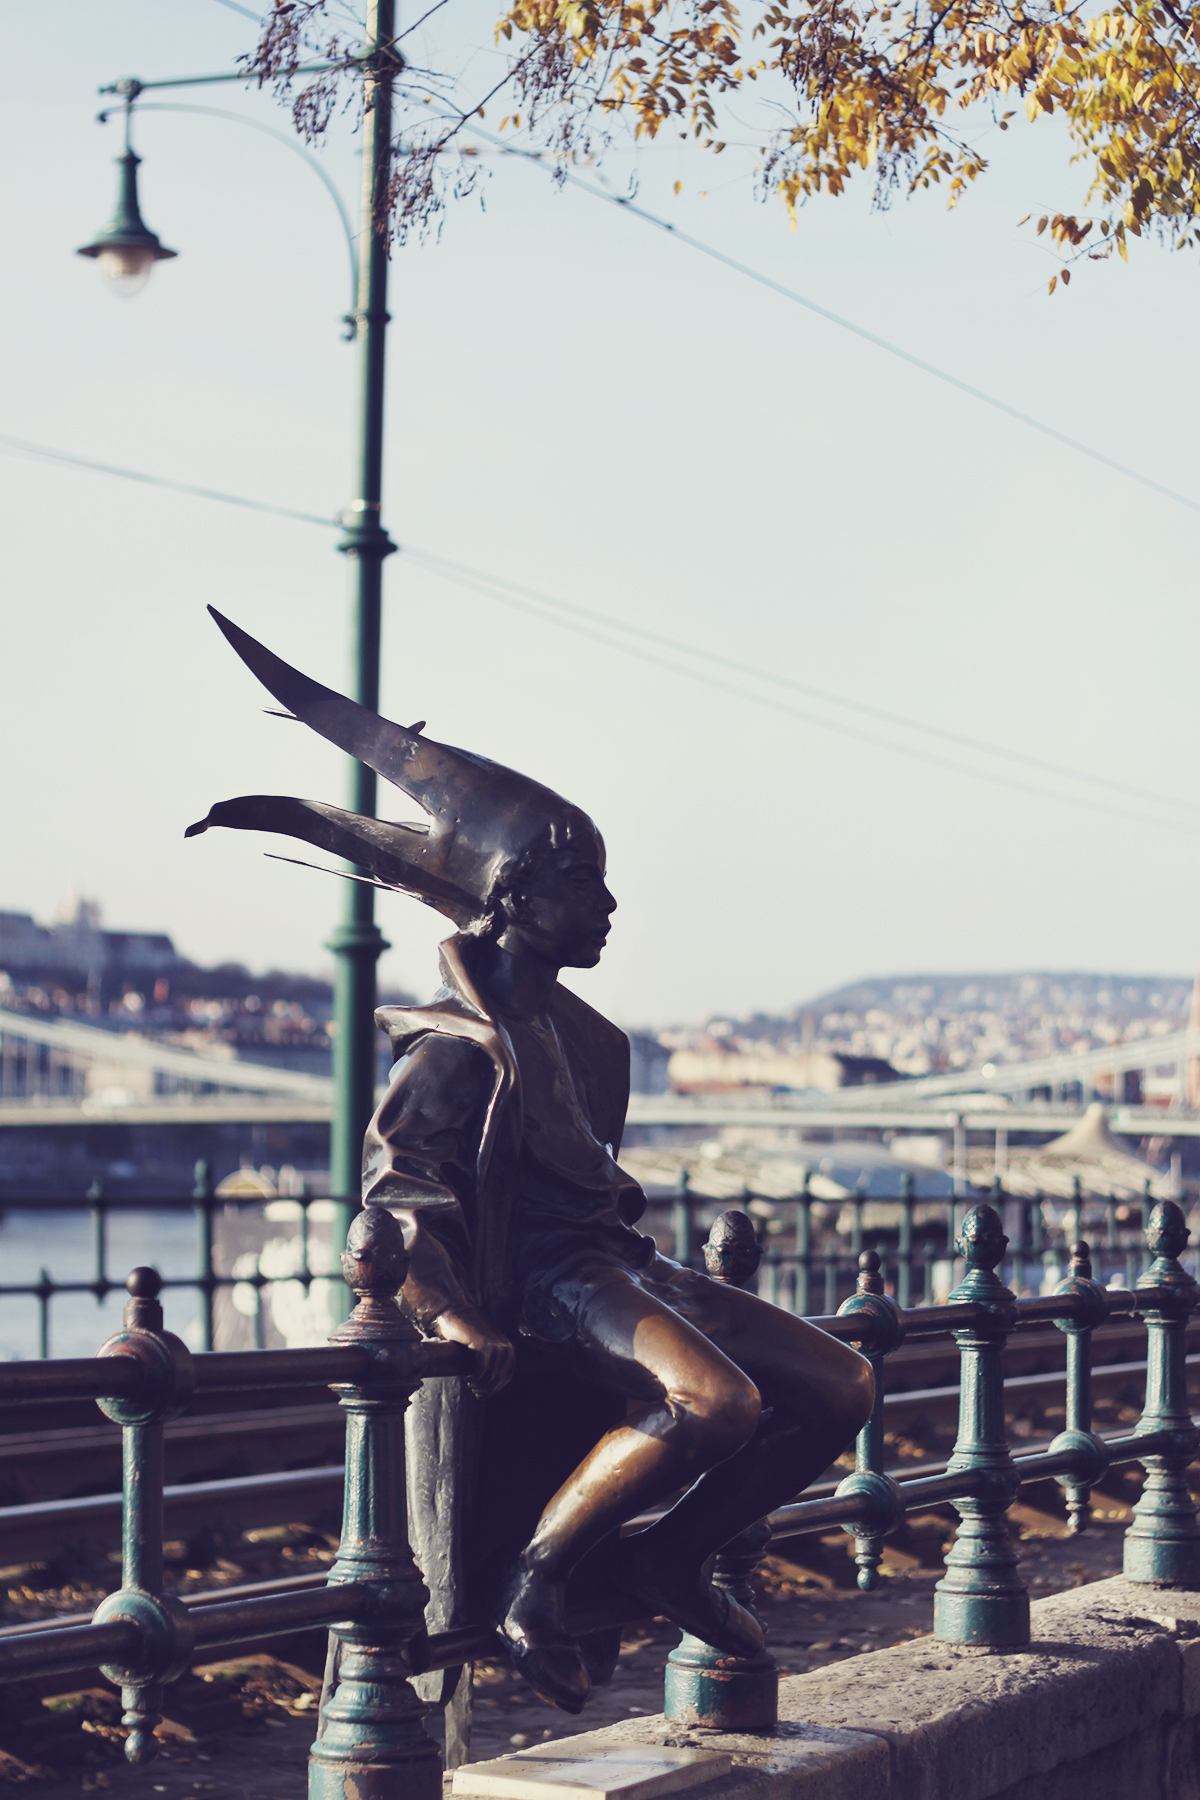 Budapest, travel post, travel, Little Princess statue